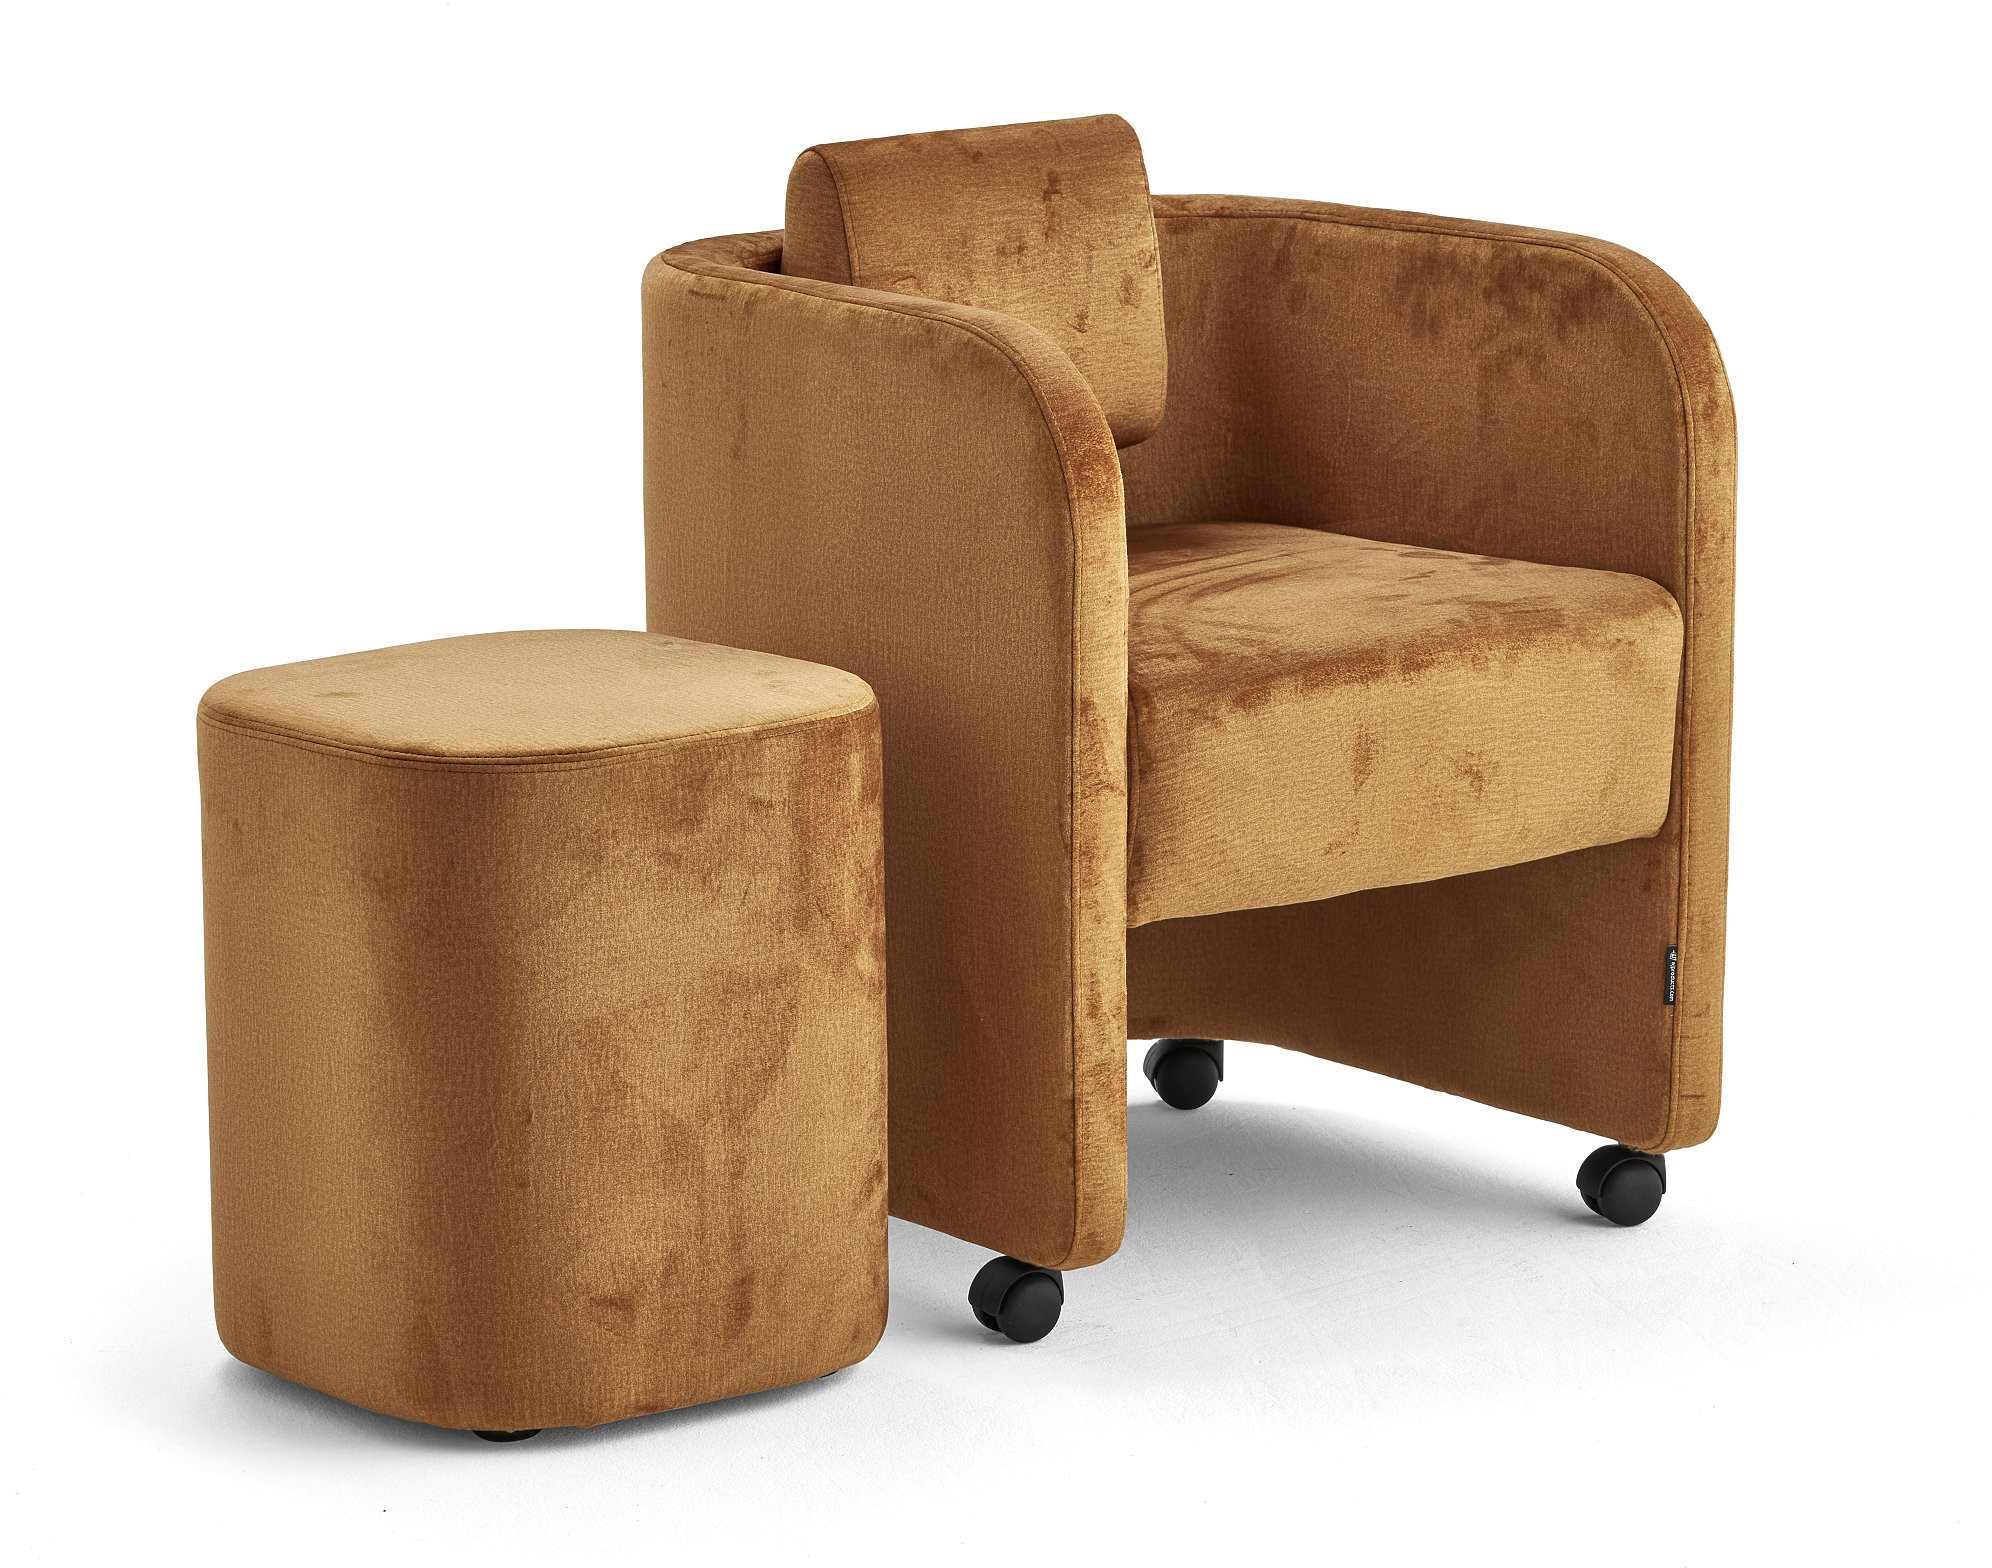 AJ Produkty Zestaw mebli COMFY, fotel i stołek, na kółkach, velvet, złoty